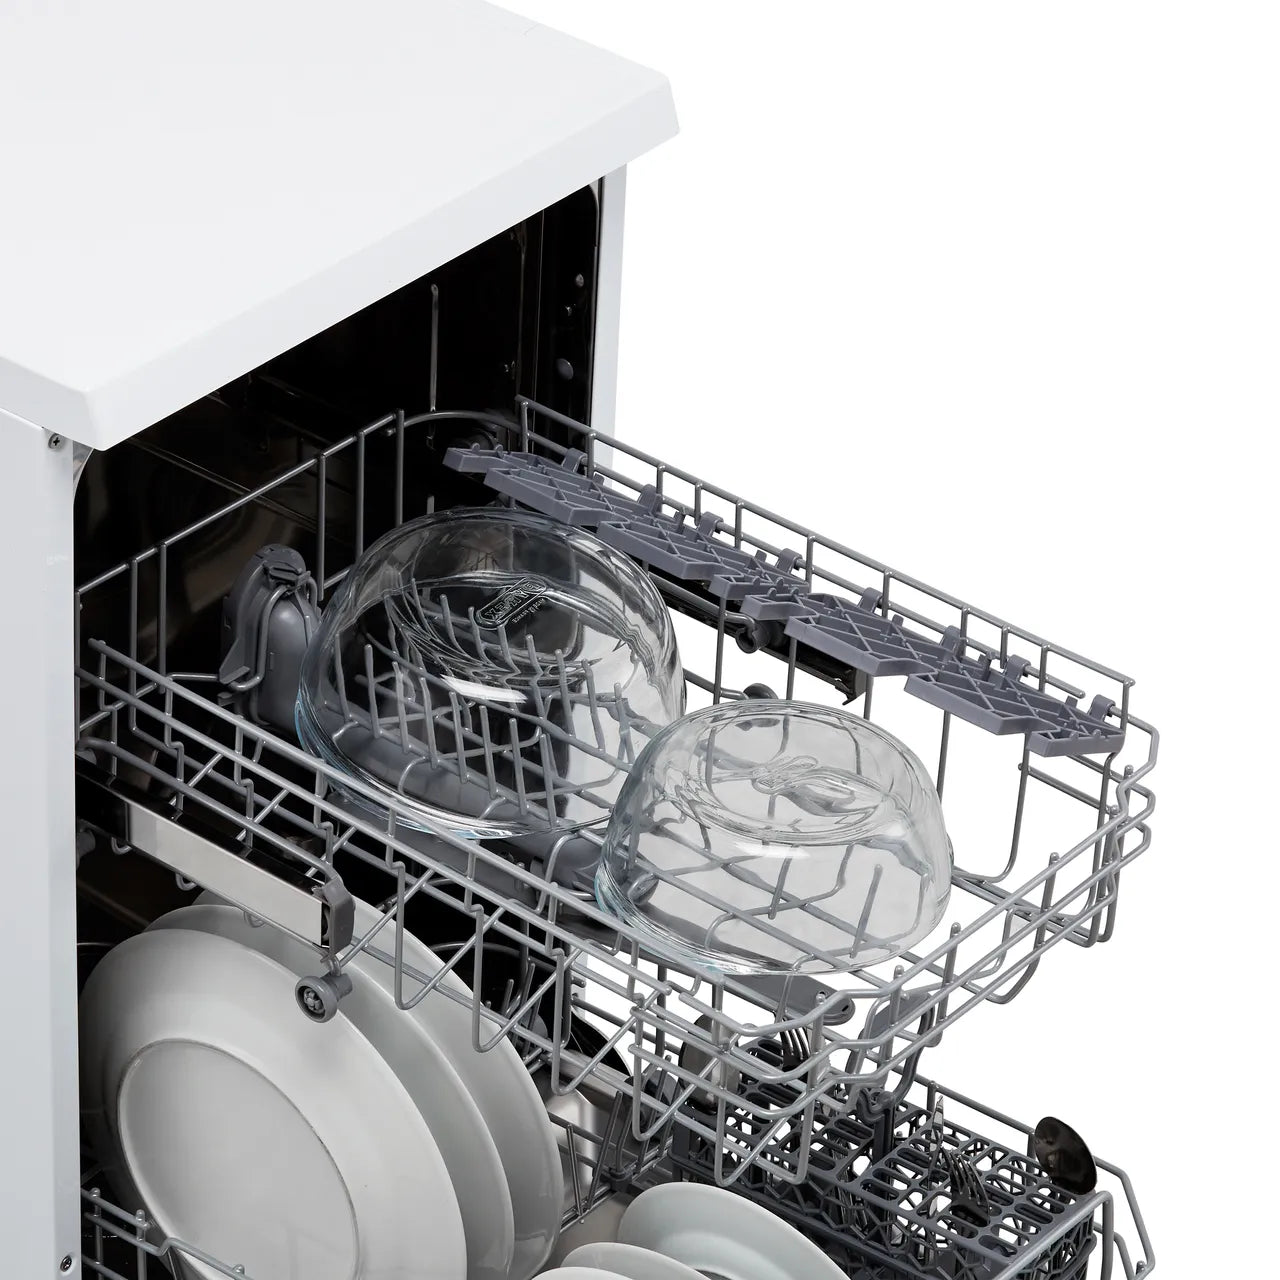 Candy CDPH2L1049W Freestanding White Slimline Dishwasher 0237